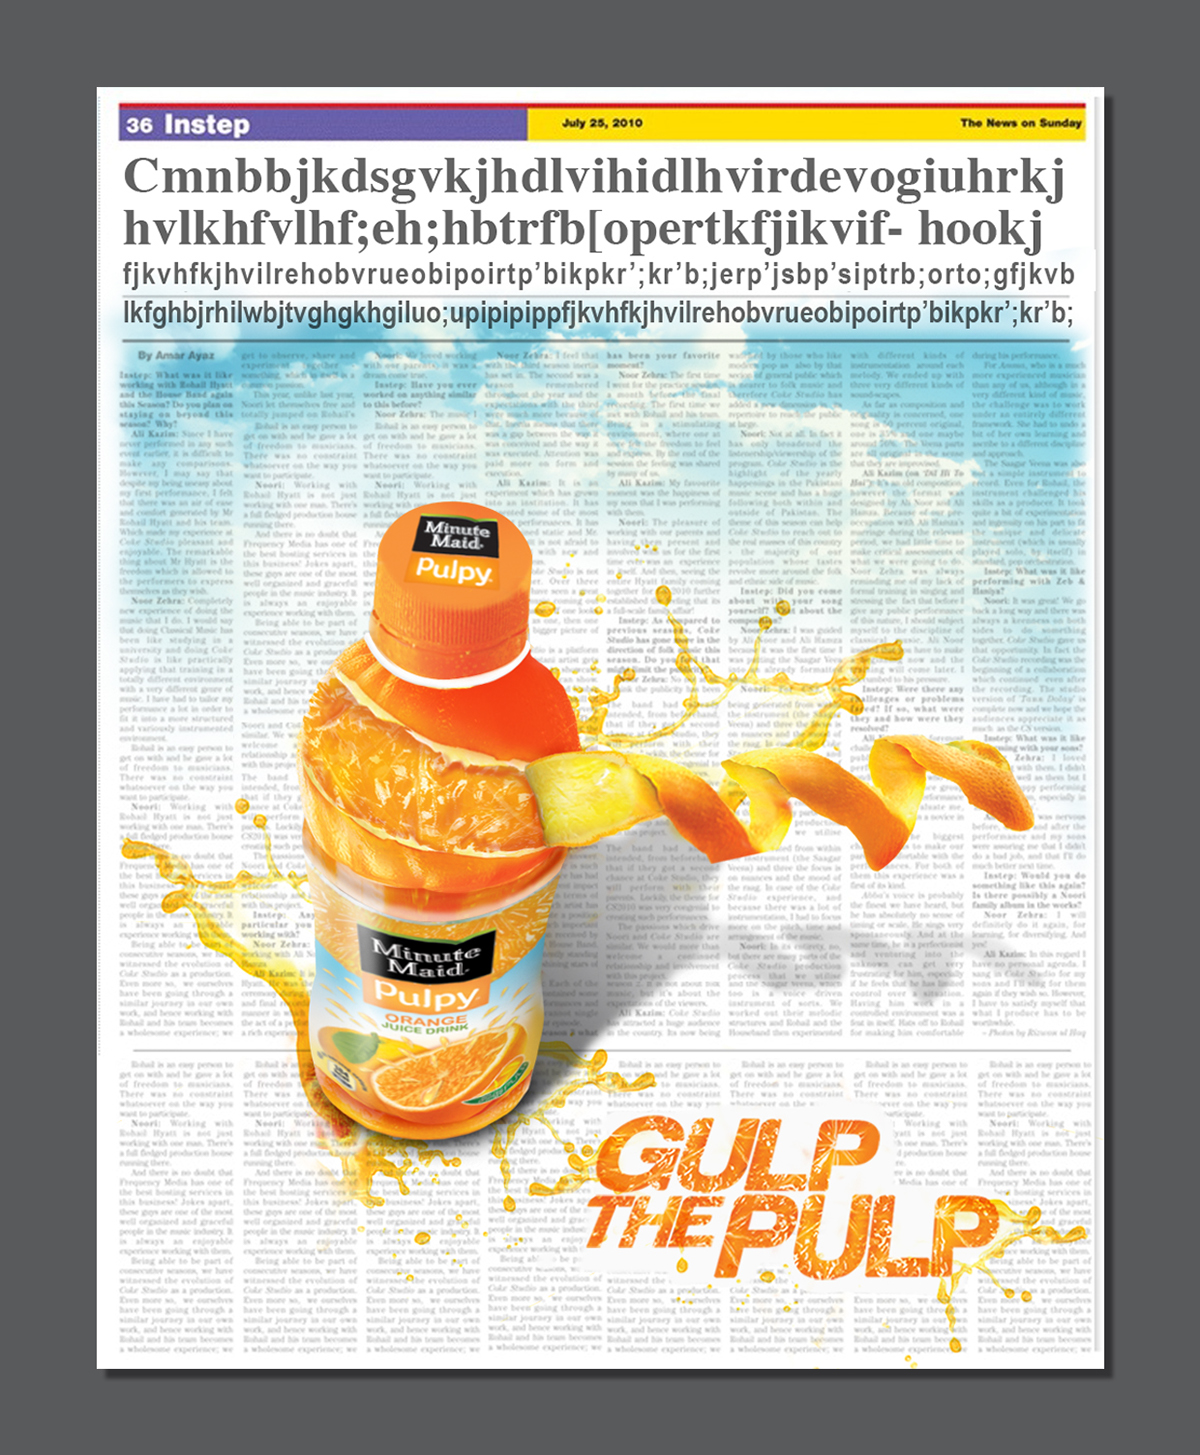 Minute Maid Pulpy orange Orange Juice MMPO orange pulp Coca-Cola coke